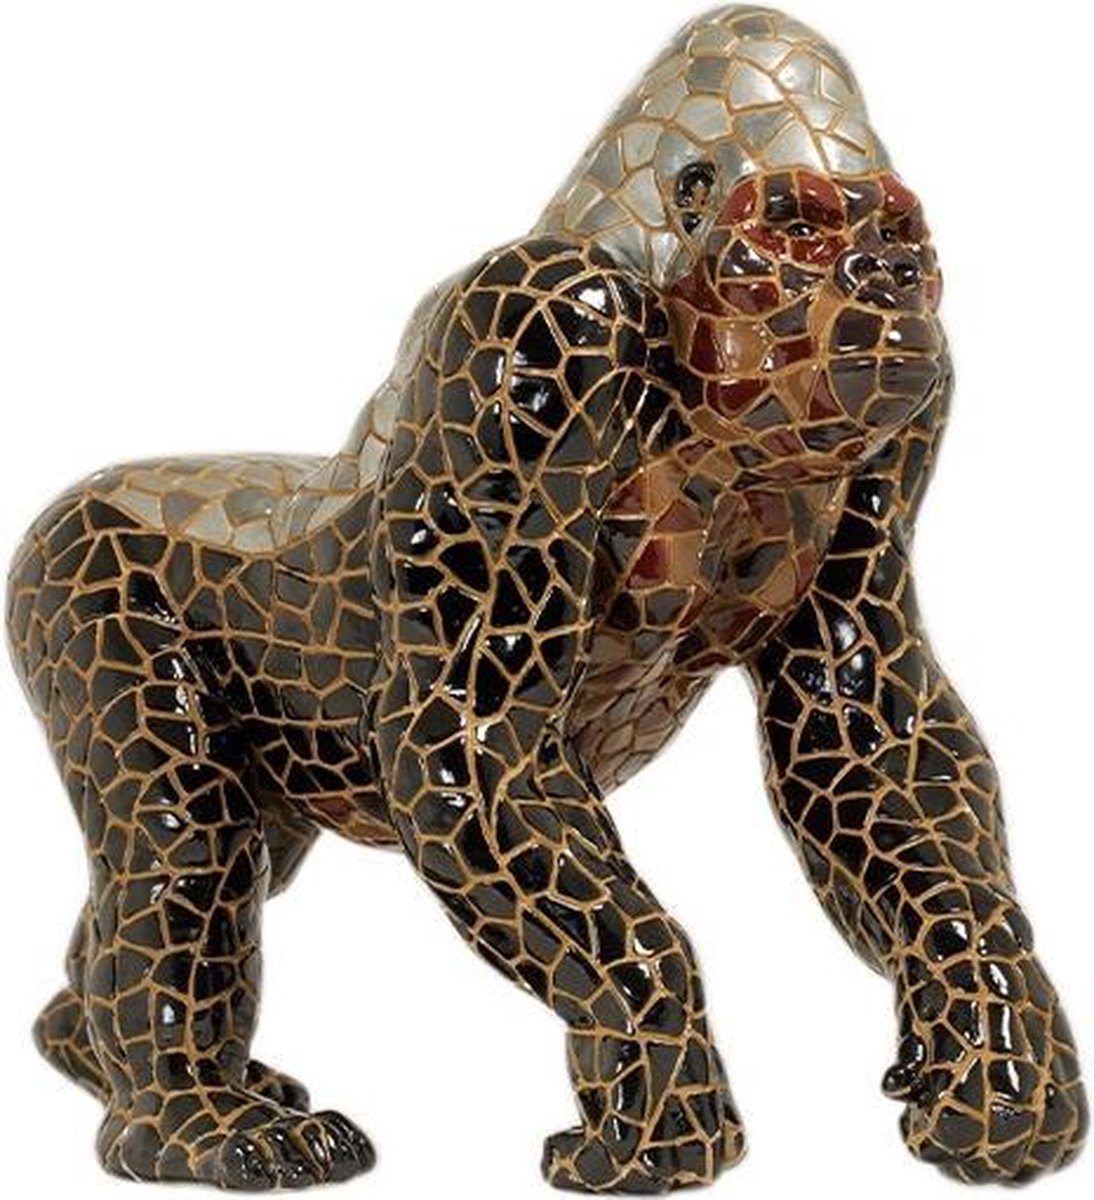 Gorilla - Barcino mozaiek Gaudi style